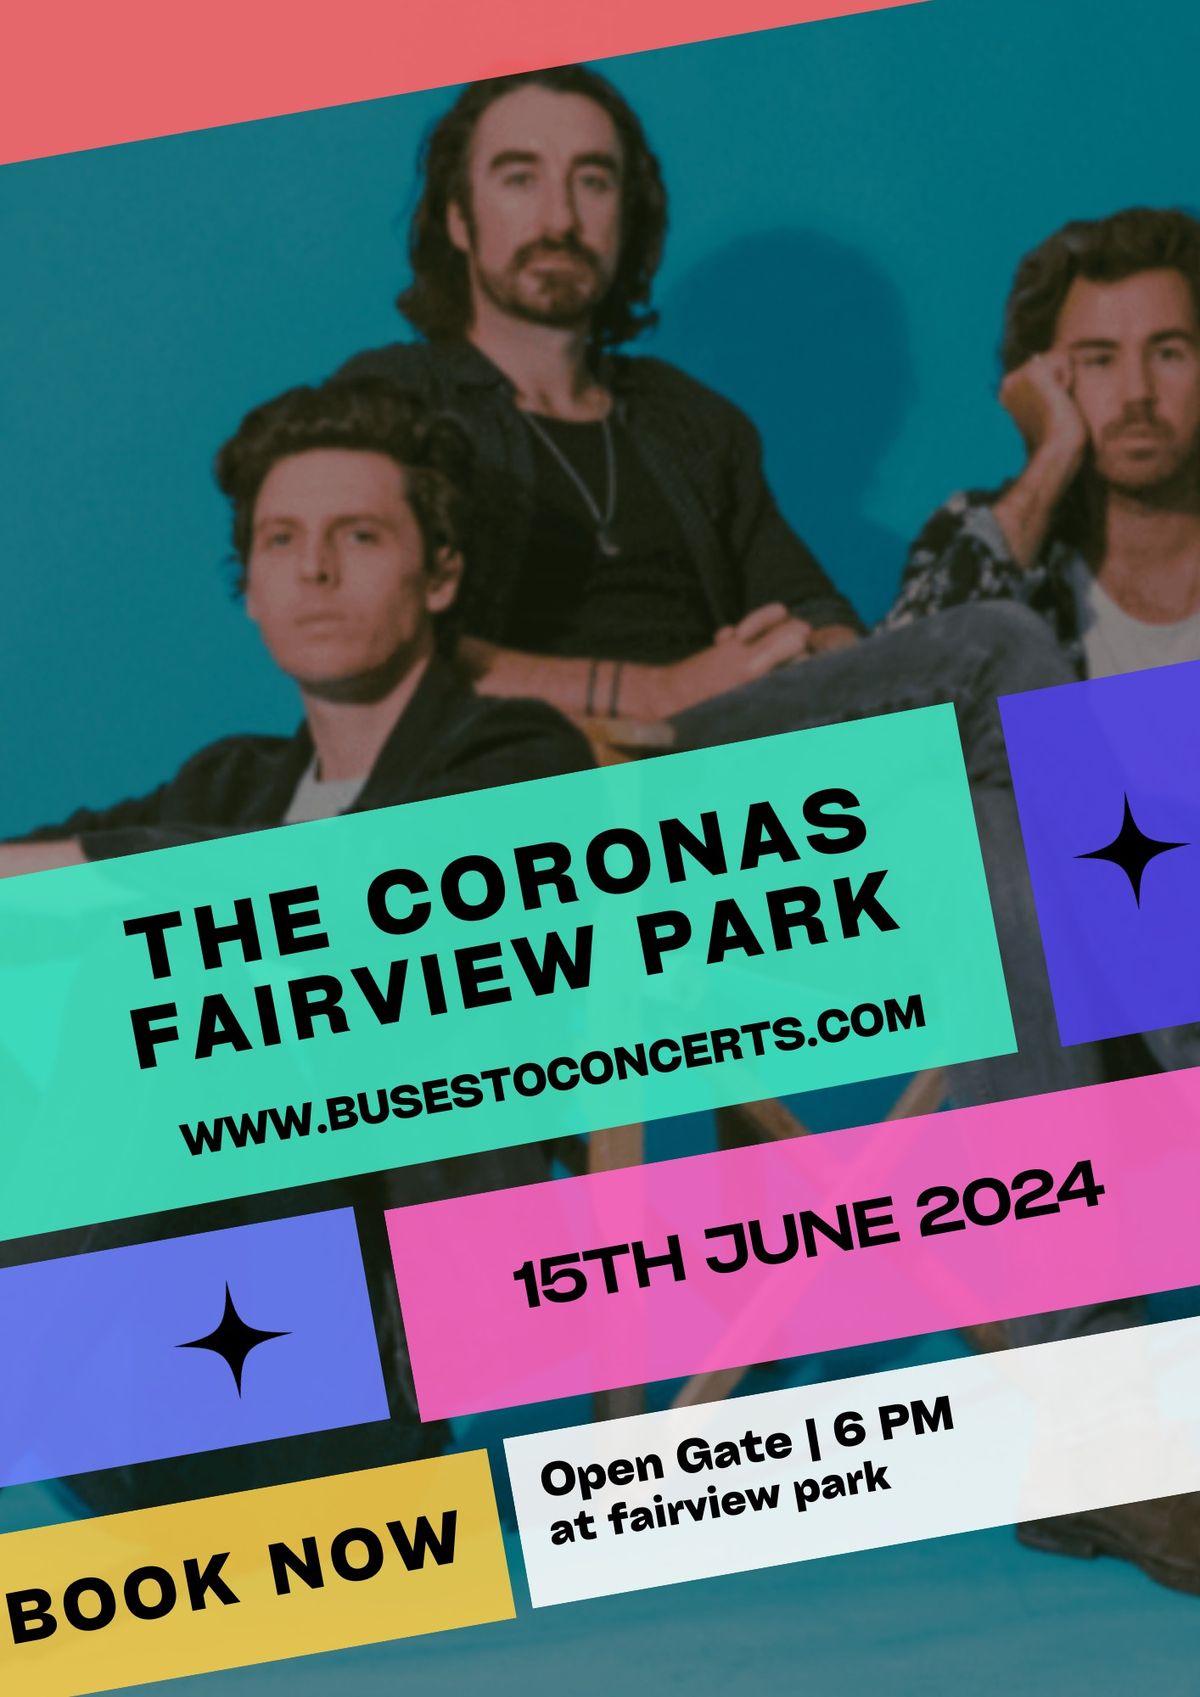 THE CORONAS - FAIRVIEW PARK - 15TH JUNE 2024